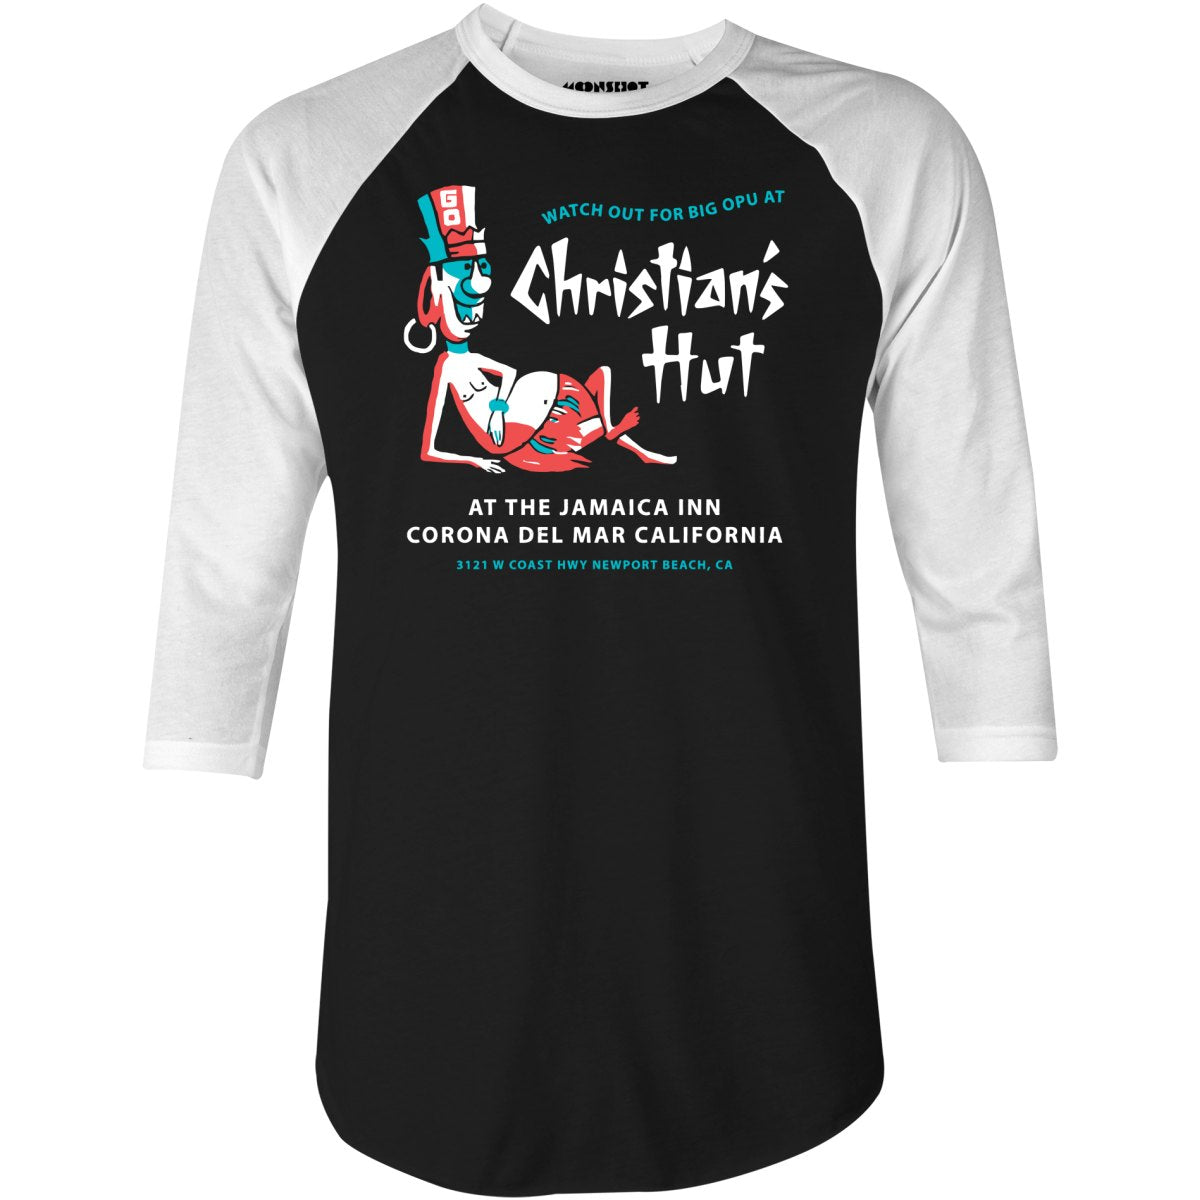 Christian's Hut - Corona Del Mar, CA - Vintage Tiki Bar - 3/4 Sleeve Raglan T-Shirt